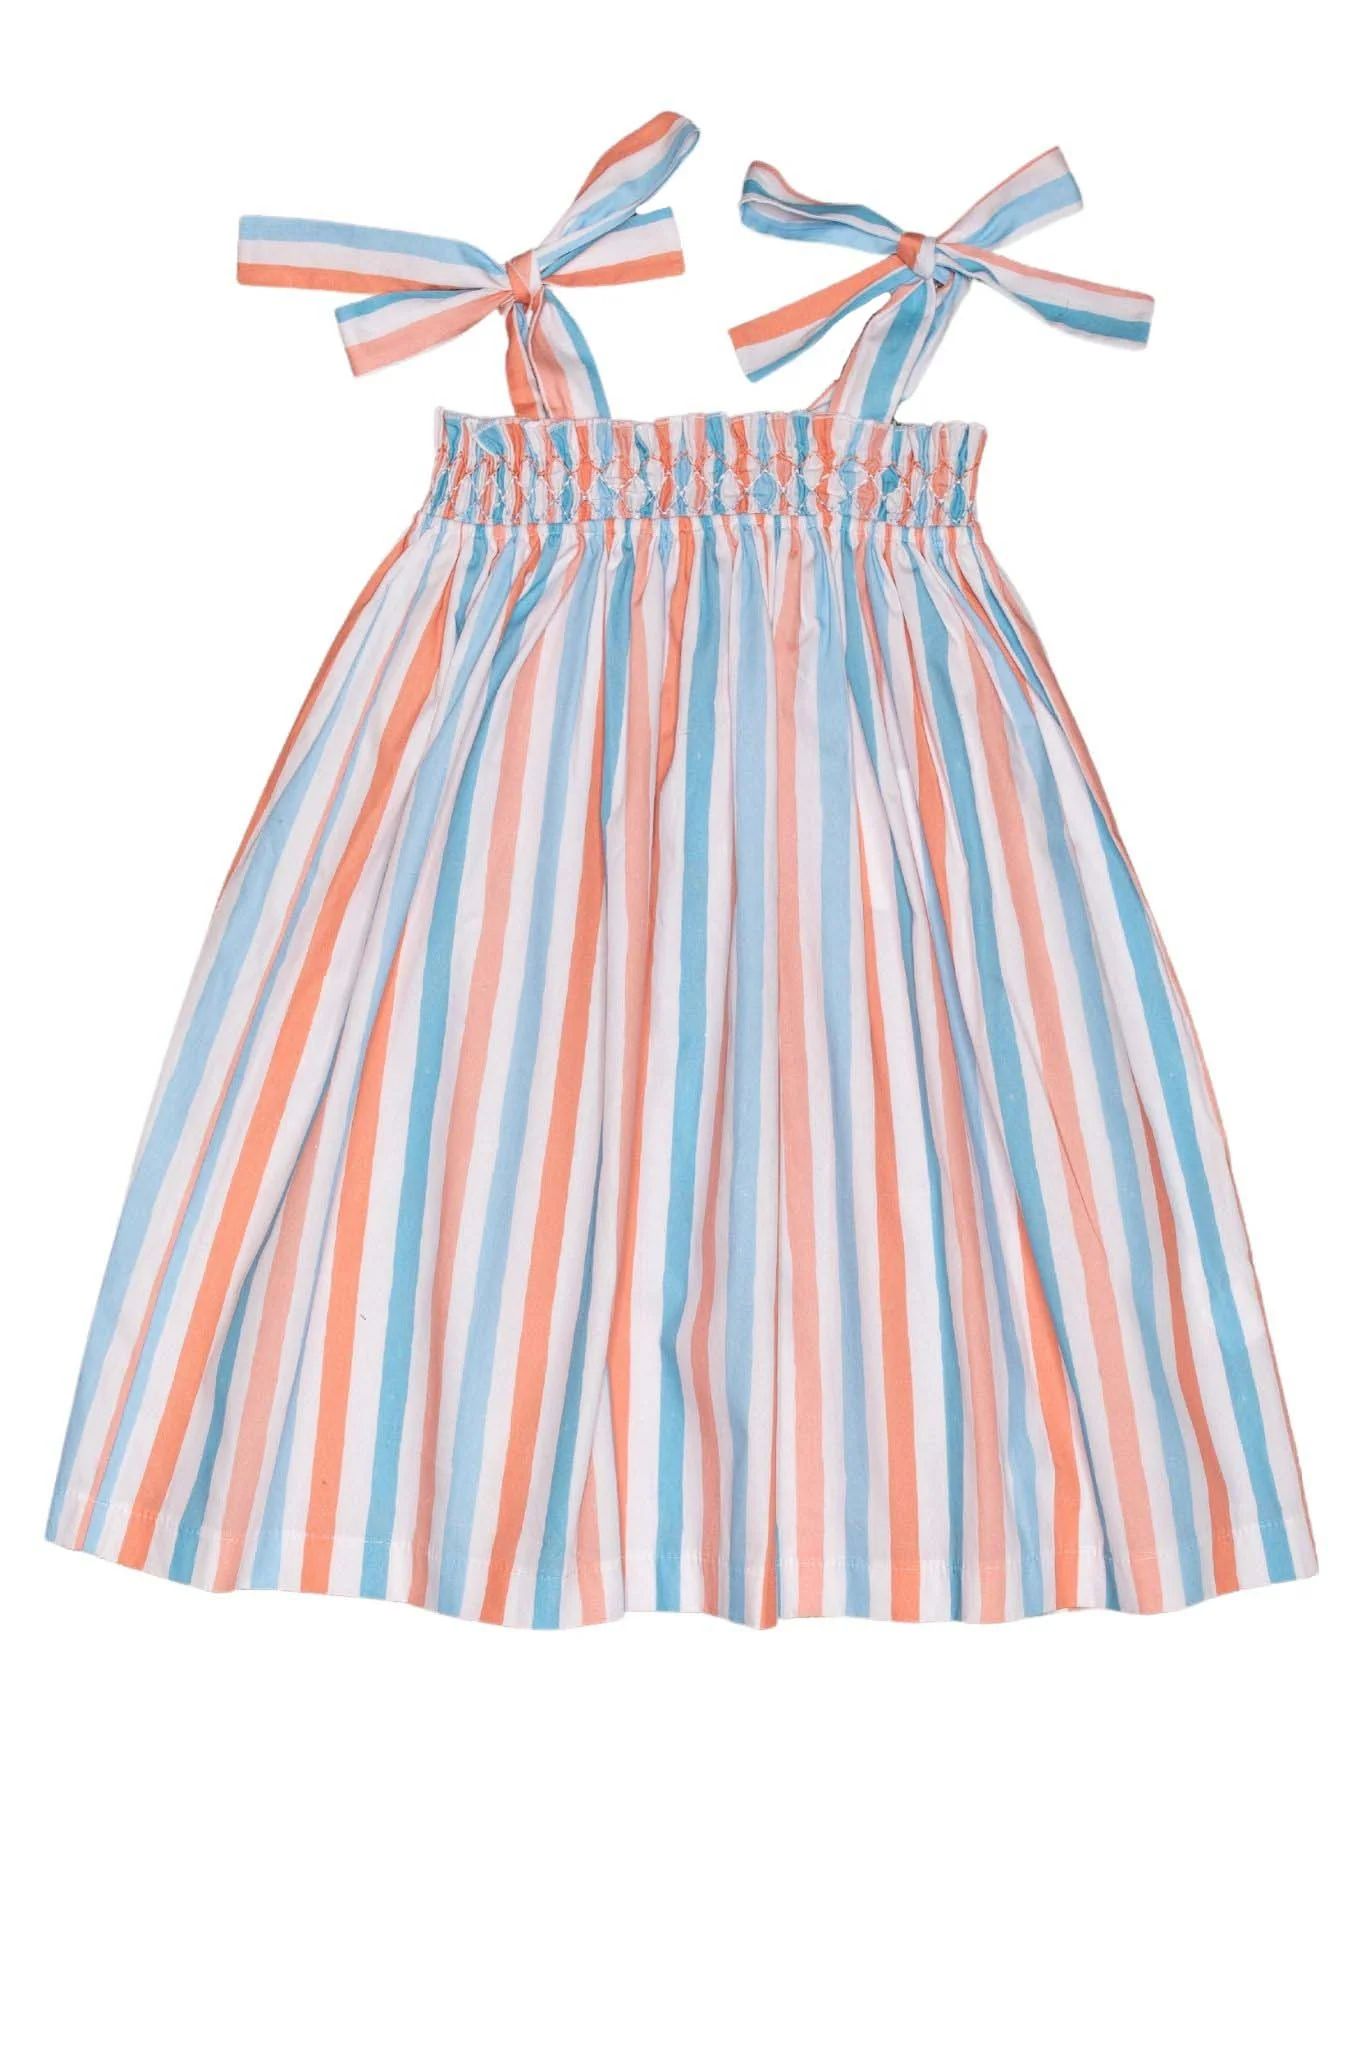 Tate Dress in July Stripe | Sun House Children's